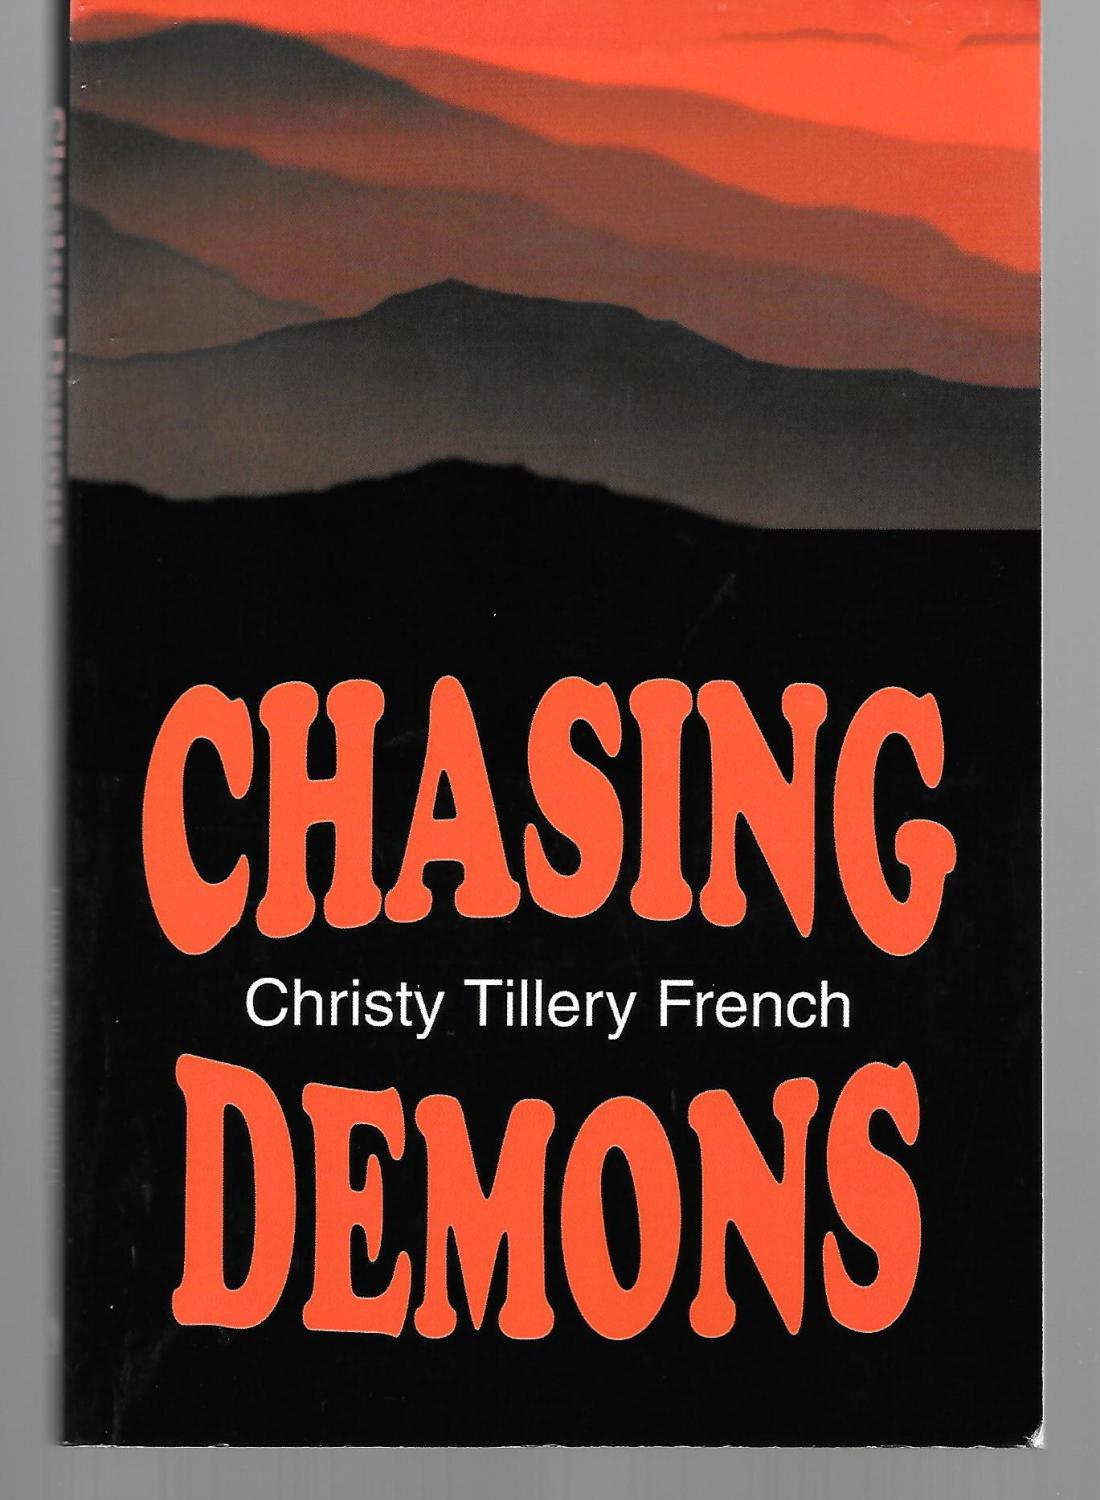 Chasing Demons - Christy Tillery French